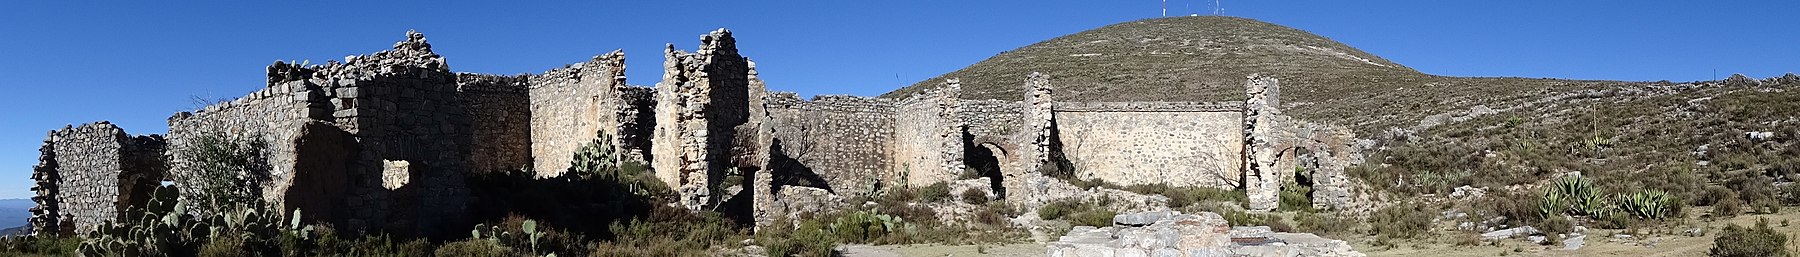 Ruins of Church - Outside Real de Catorce - San Luis Potosi - Mexico banner.jpg